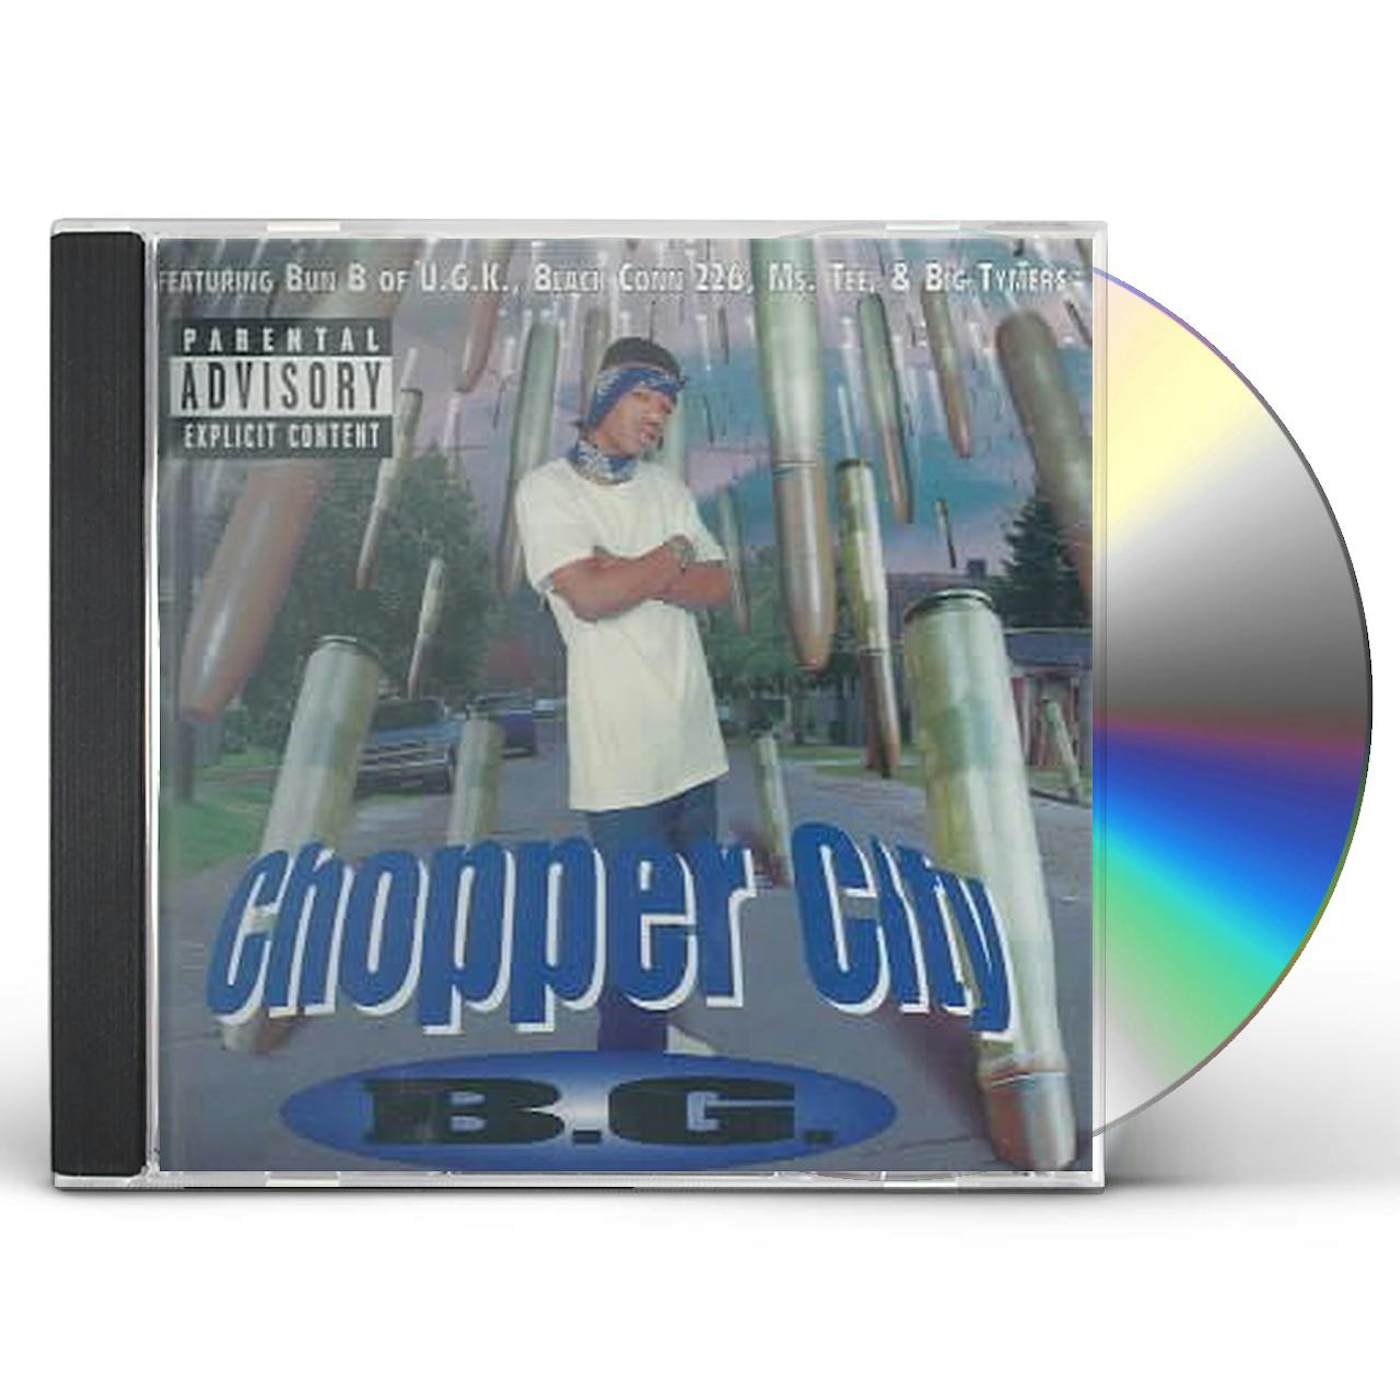 BG CHOPPER CITY CD